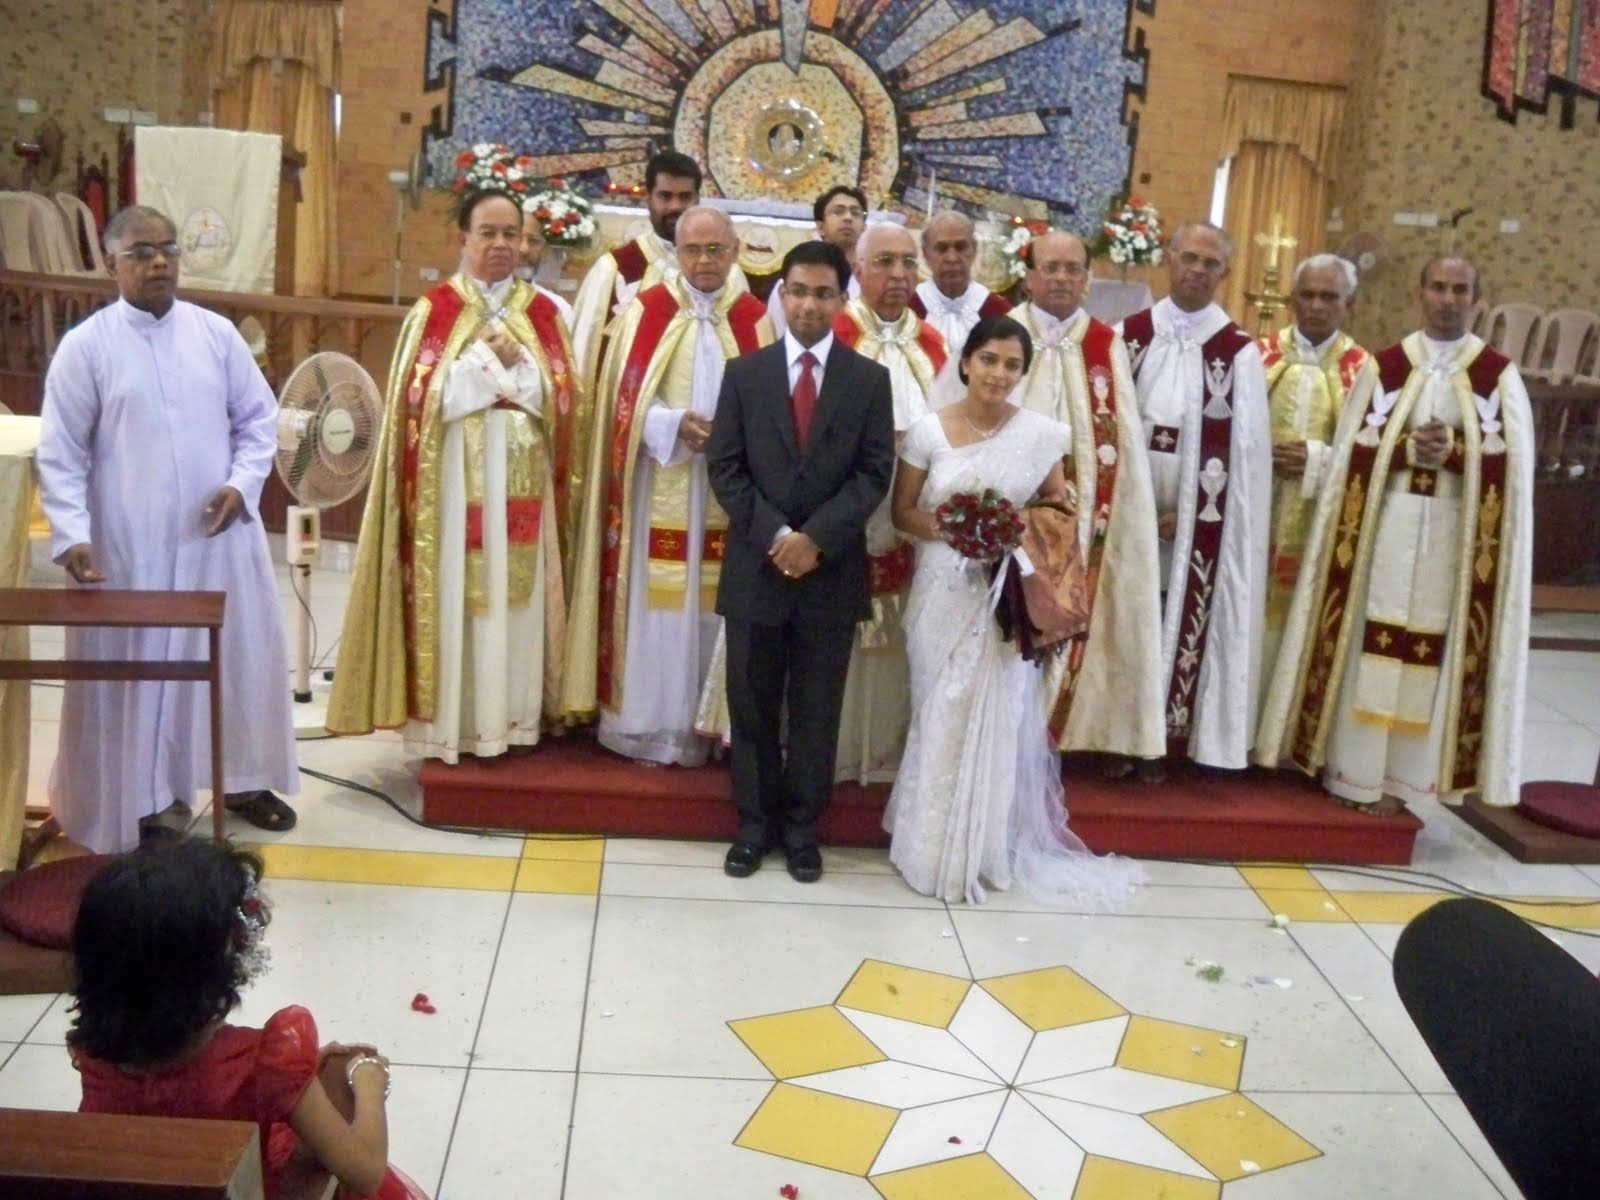 Roman Catholic Wedding Vows
 Within the Roman Catholic Church the exchange of Catholic